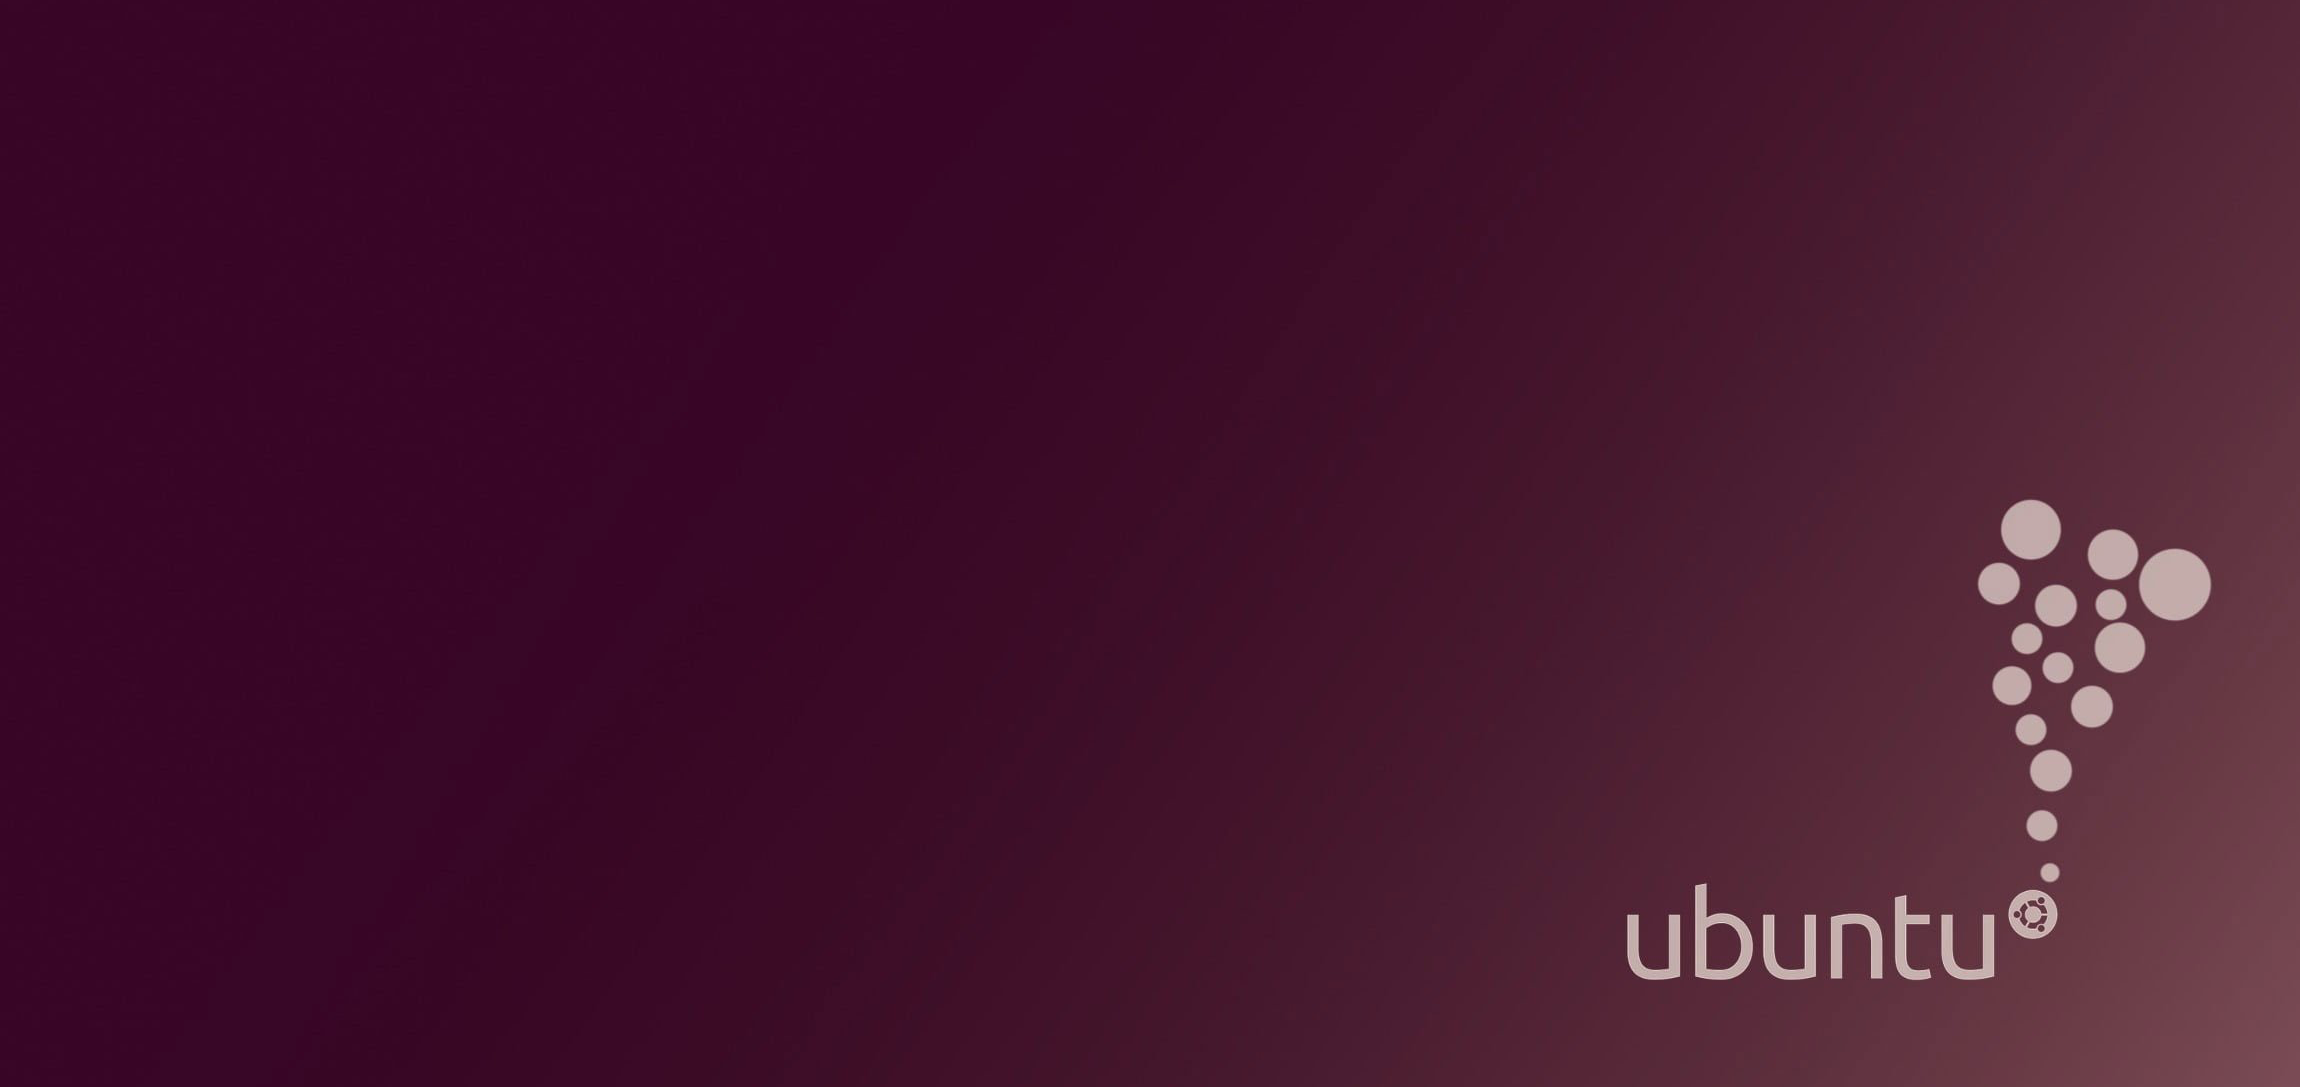 [Ubuntu] EC2 Ubuntu에 접속 후 초기 셋팅